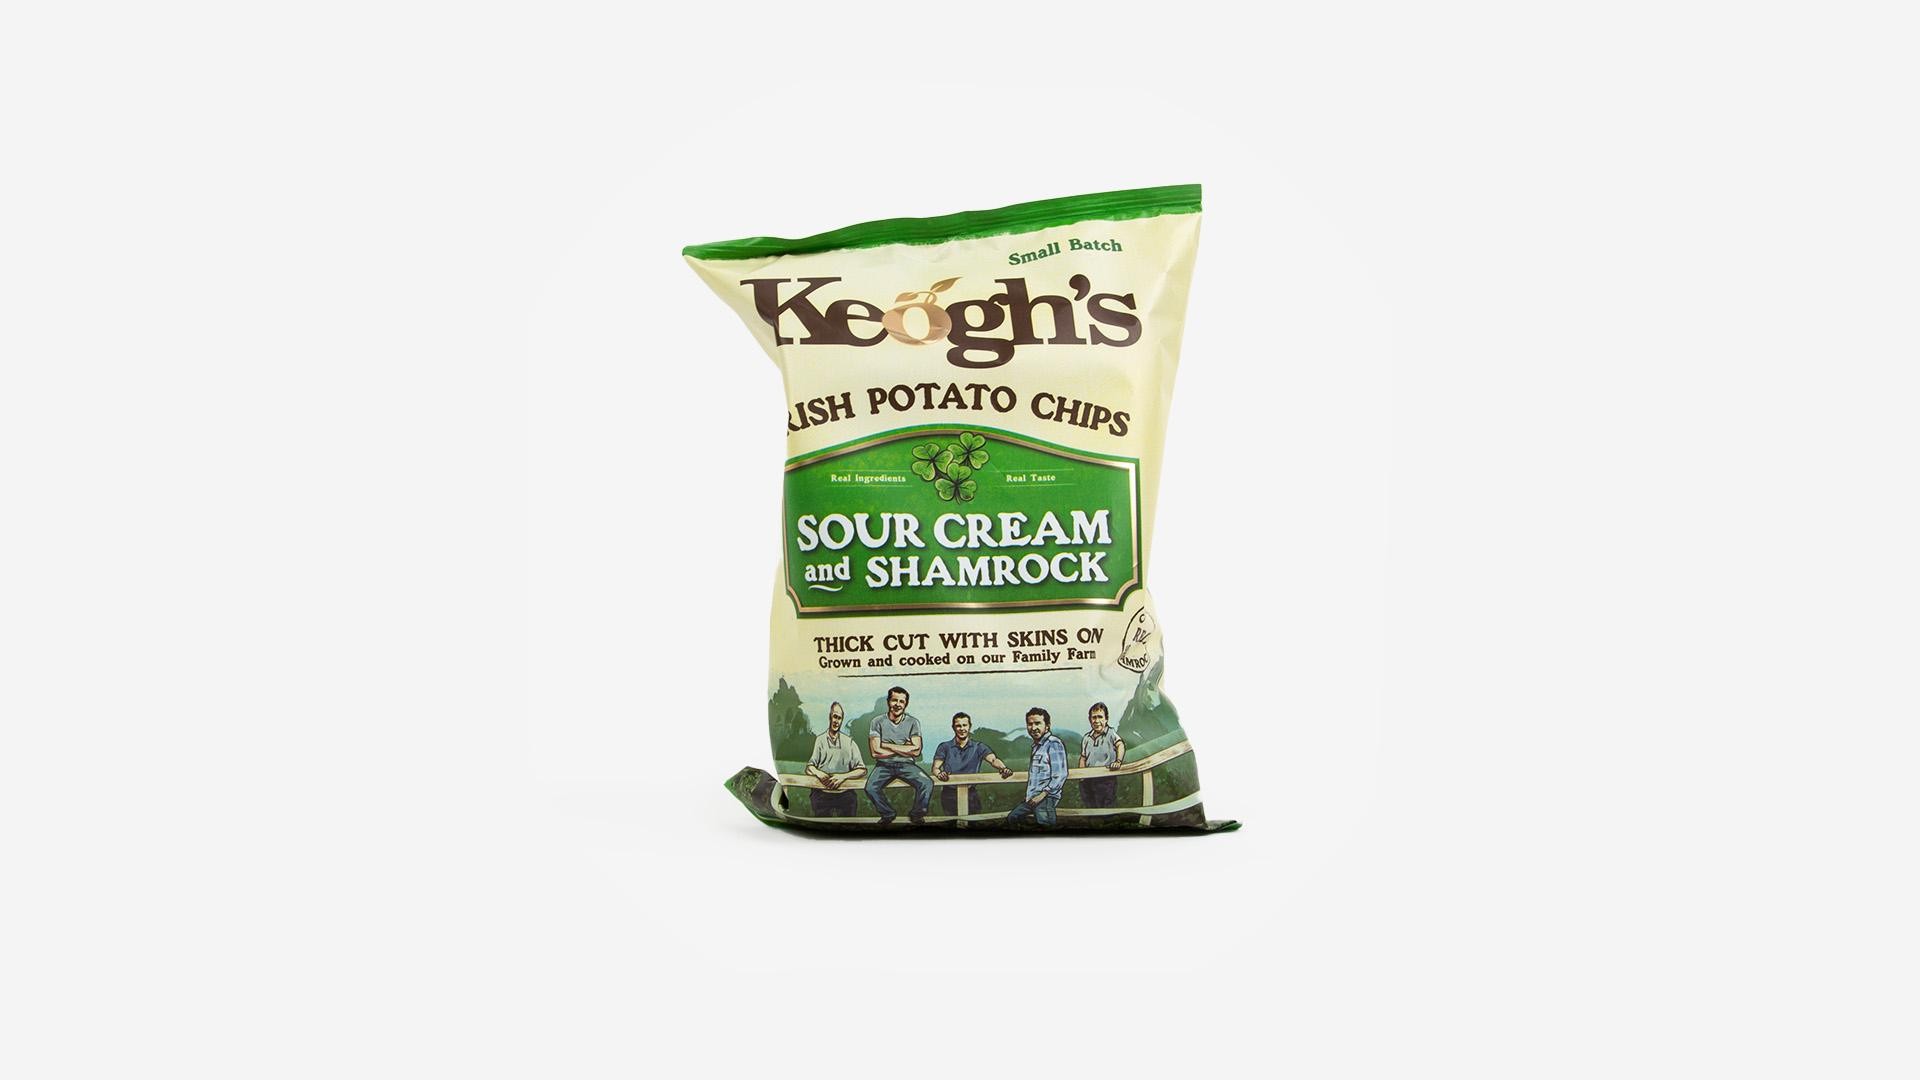 Keogh's Shamrock & Sour Cream Potato Chips